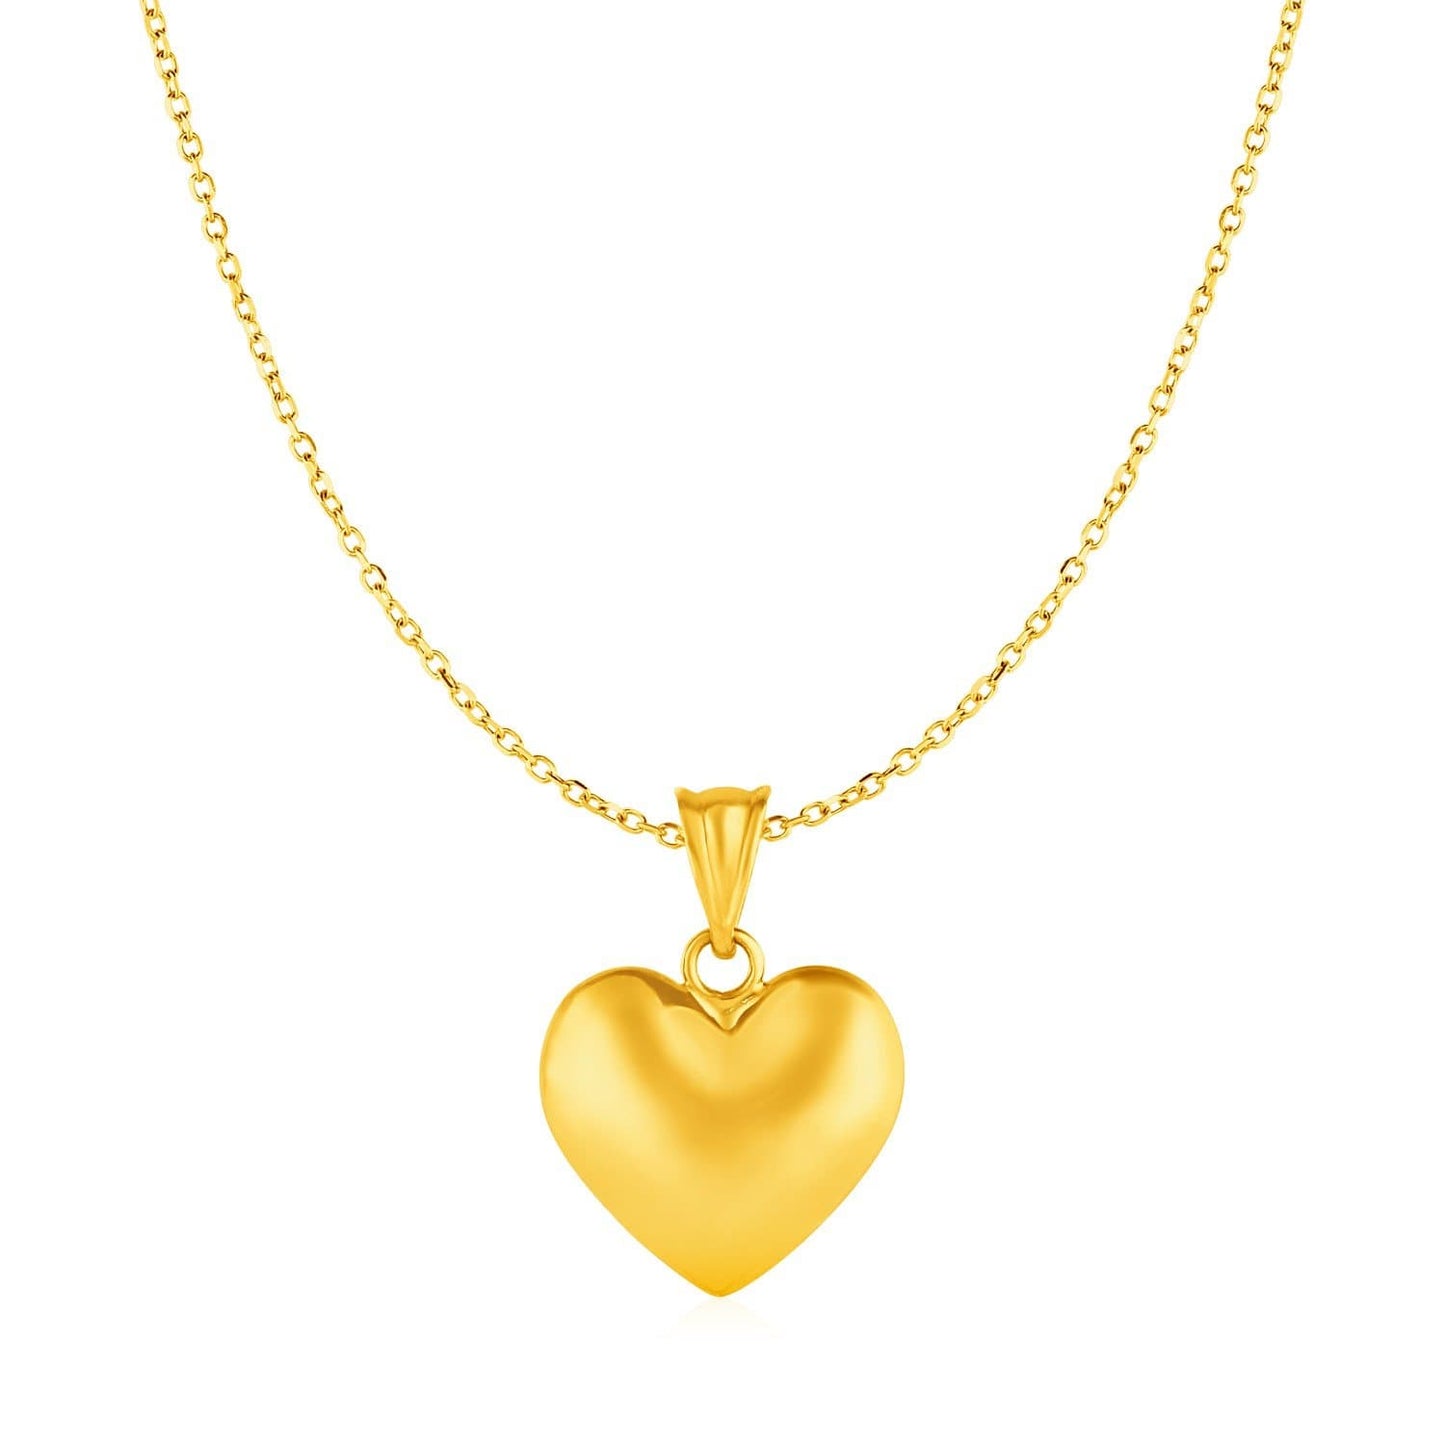 Puffed Heart Pendant in 10k Yellow Gold